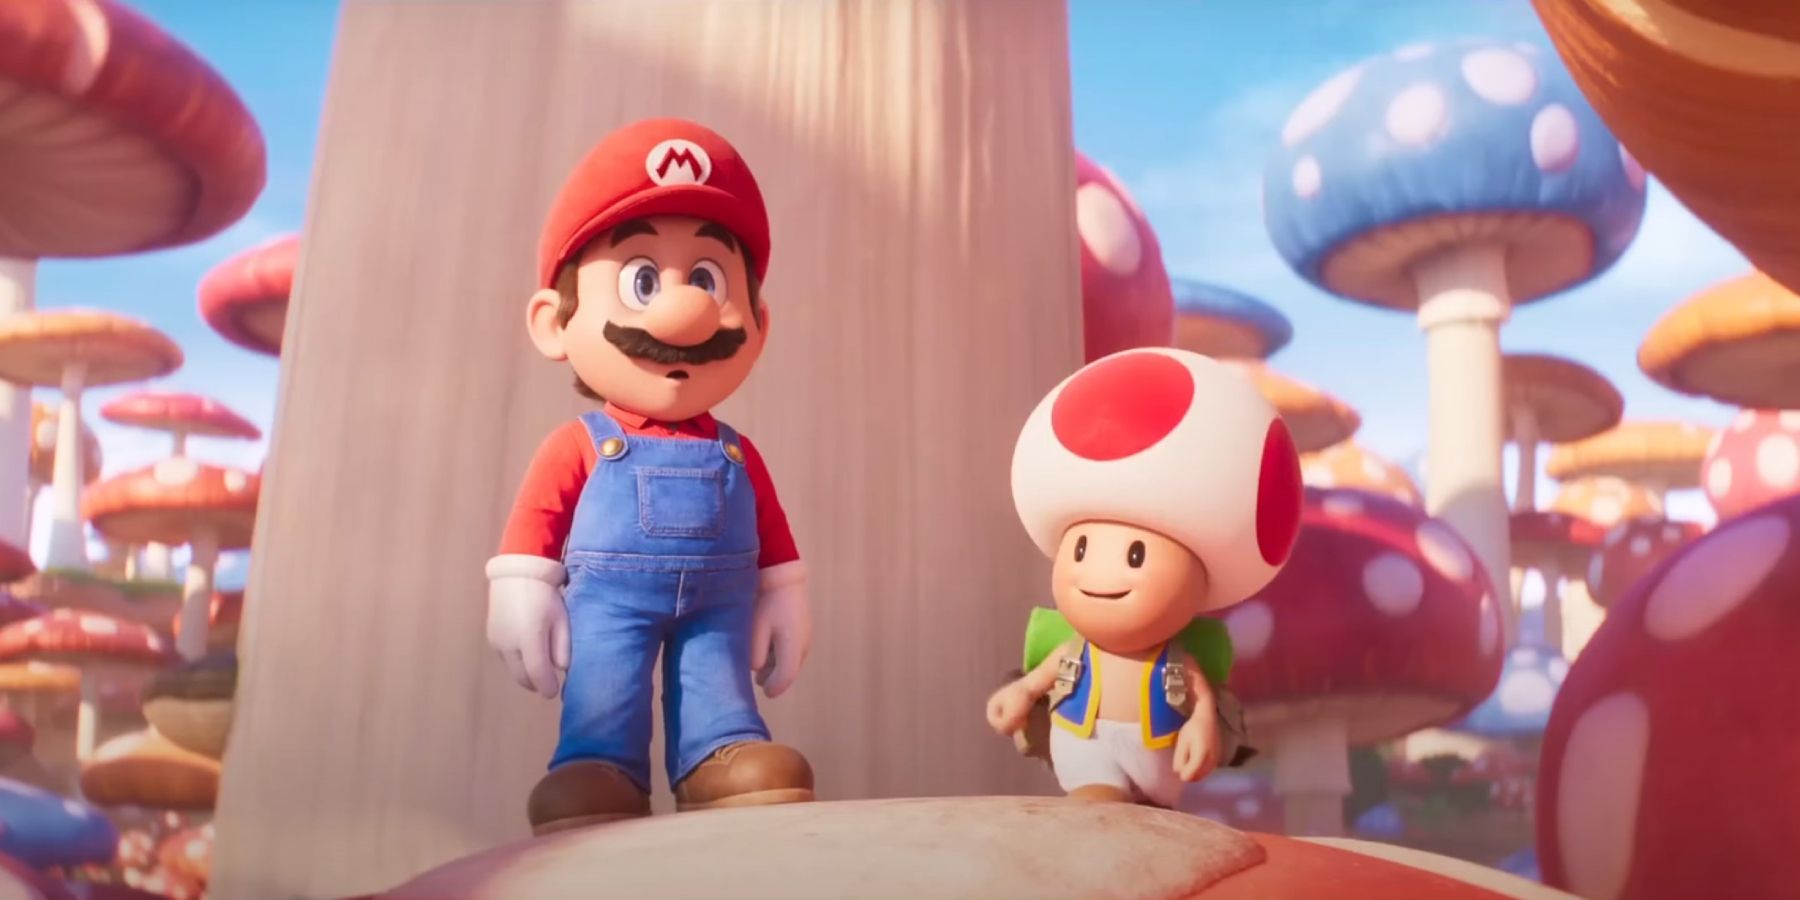 Mario and Toad large mushroom tops in the Super Mario Bros. movie